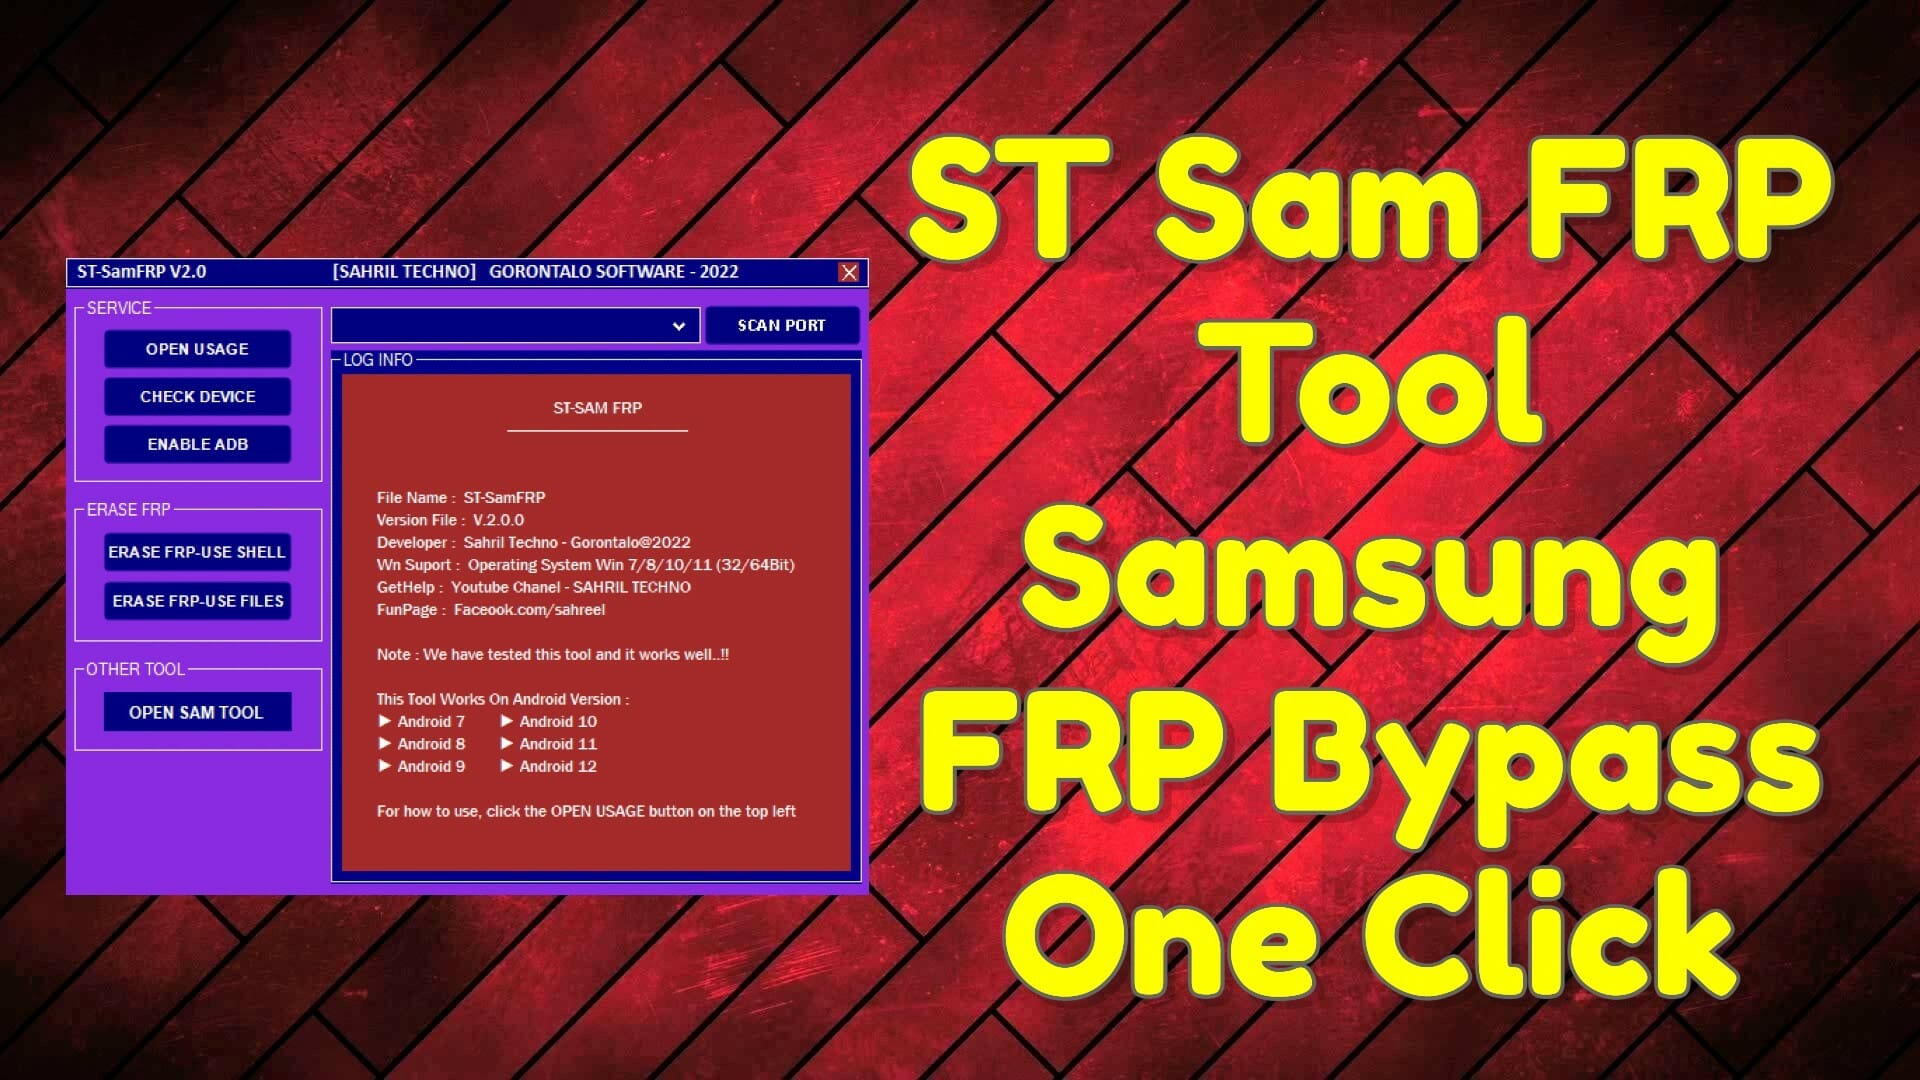 St-sam-frp-tool-2. 0-added-samsung-frp-bypass-one-click